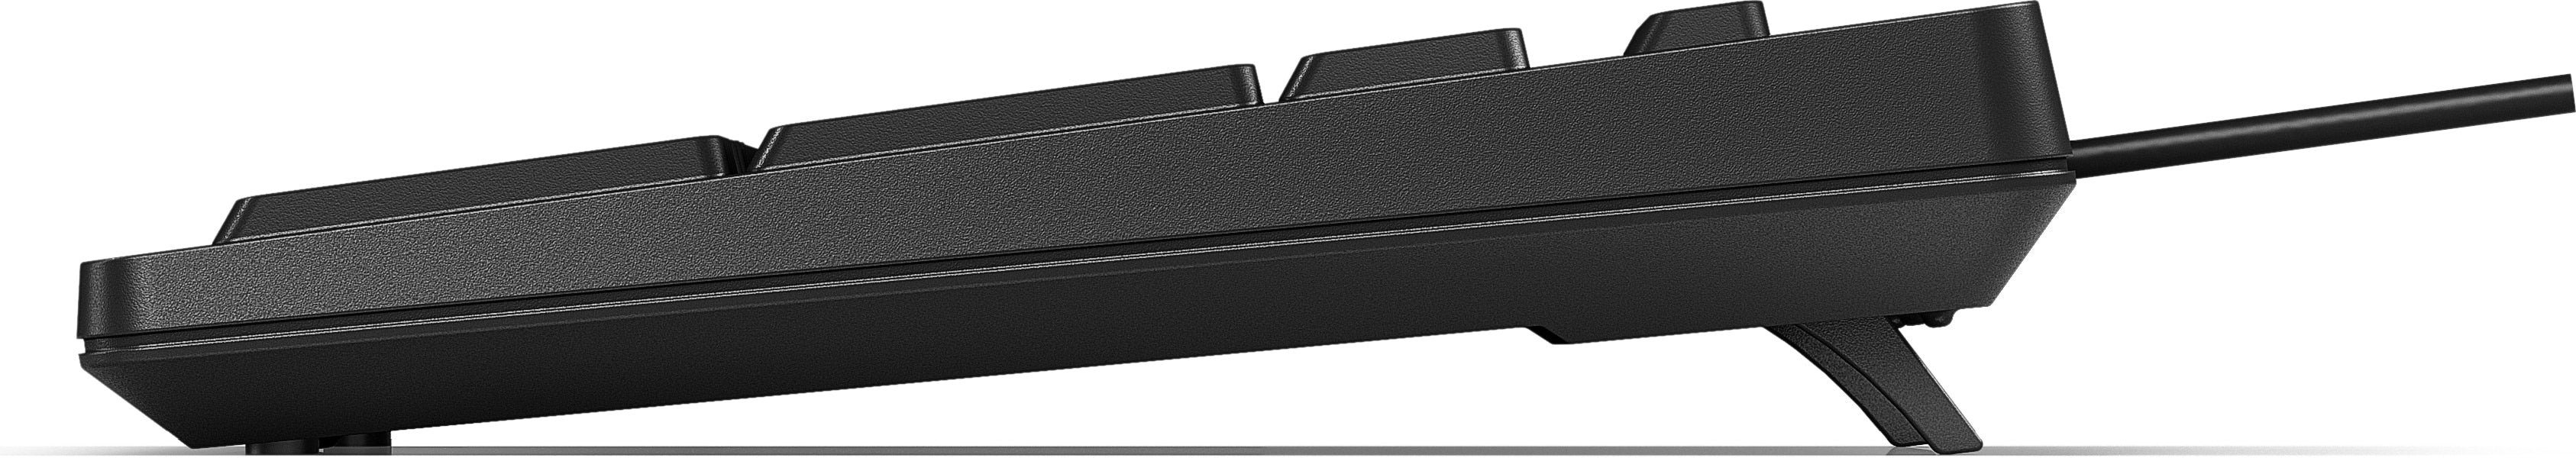 HP 125 Wired Keyboard, Full-size (100%), USB, Membrane, Black